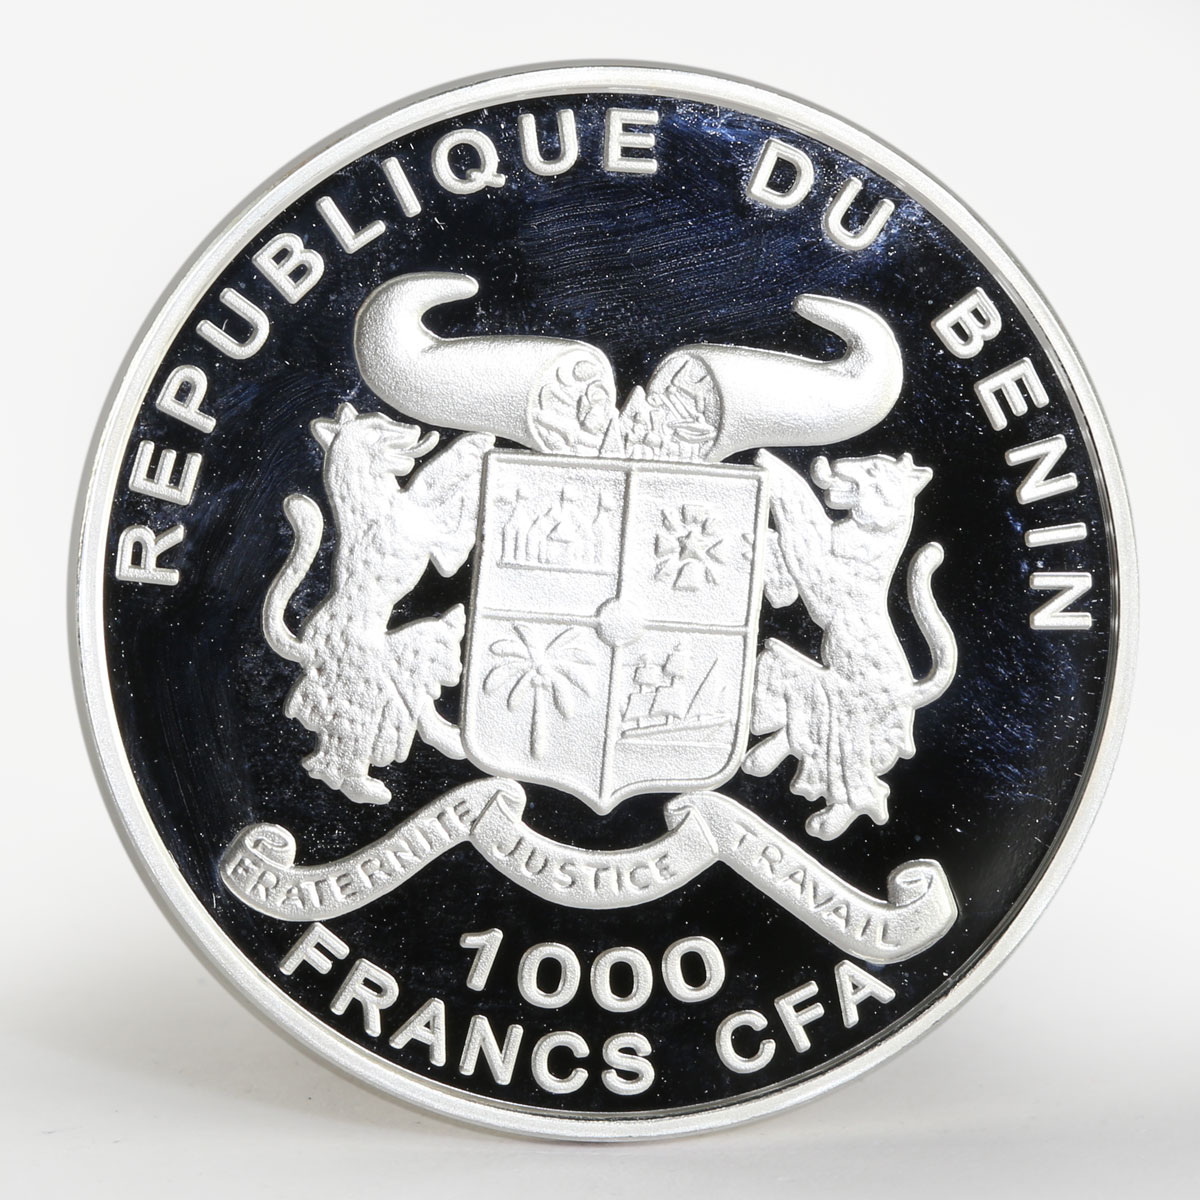 Benin 1000 francs Leif Ericson New World explorer ship proof silver coin 2001